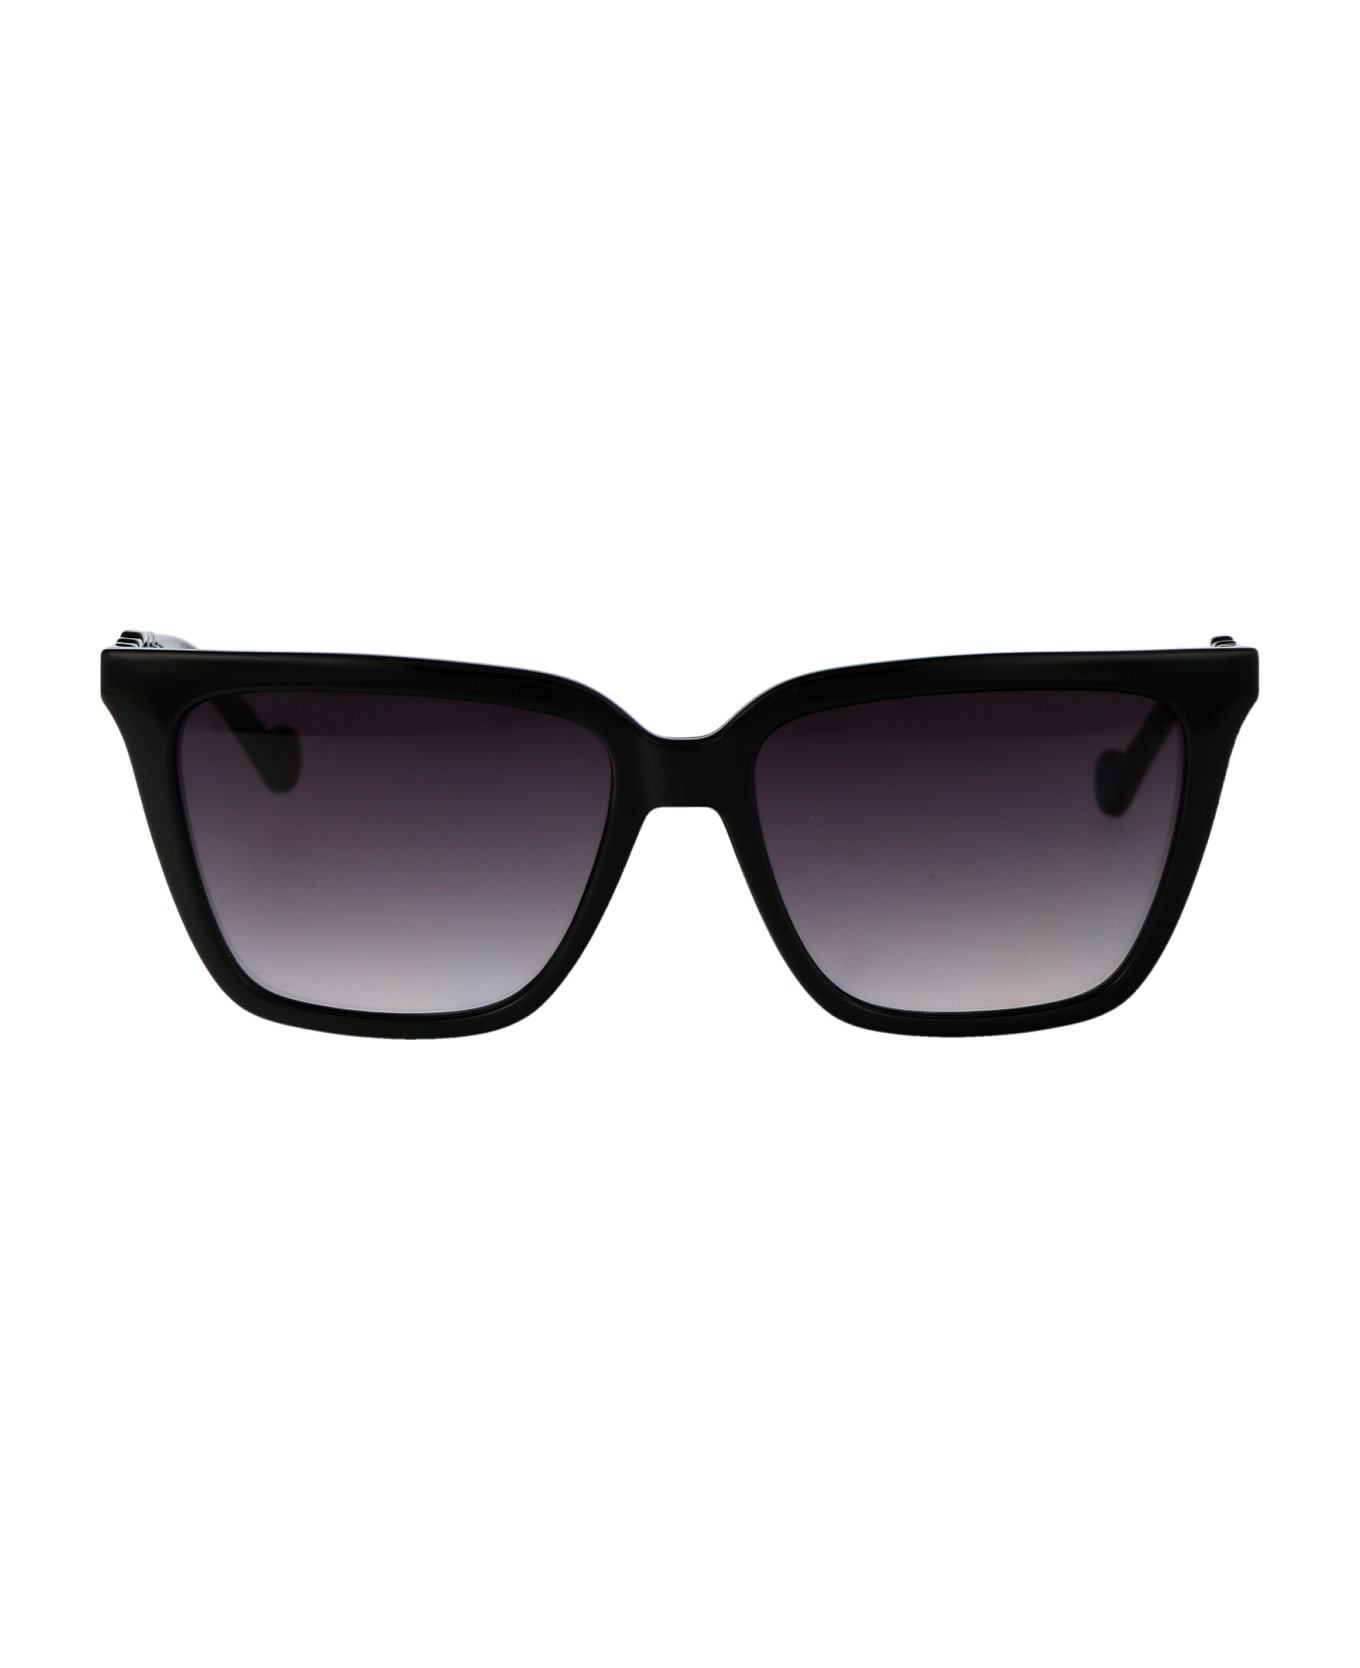 Liu-Jo Lj780s Sunglasses - 001 BLACK